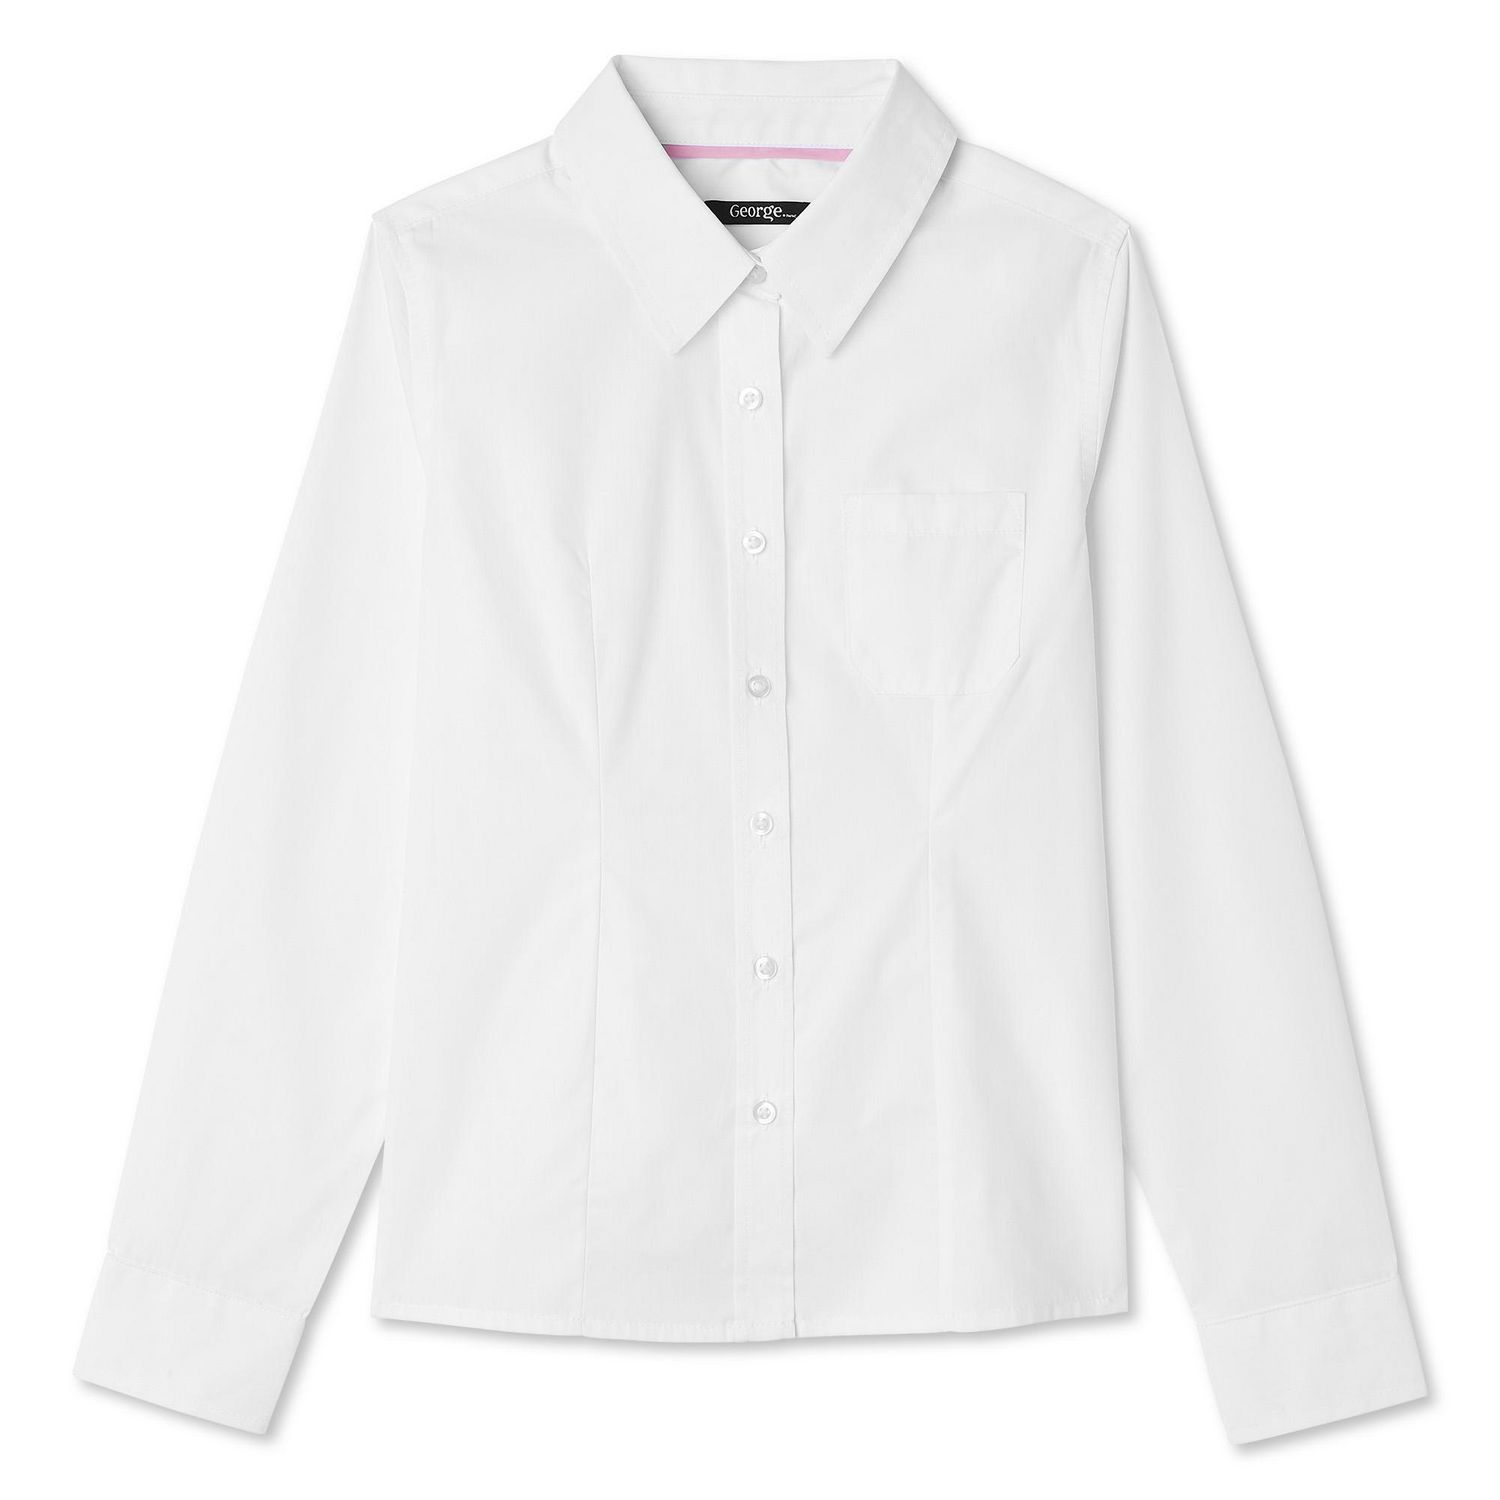 George Girls' Long Sleeve Uniform Blouse | Walmart Canada